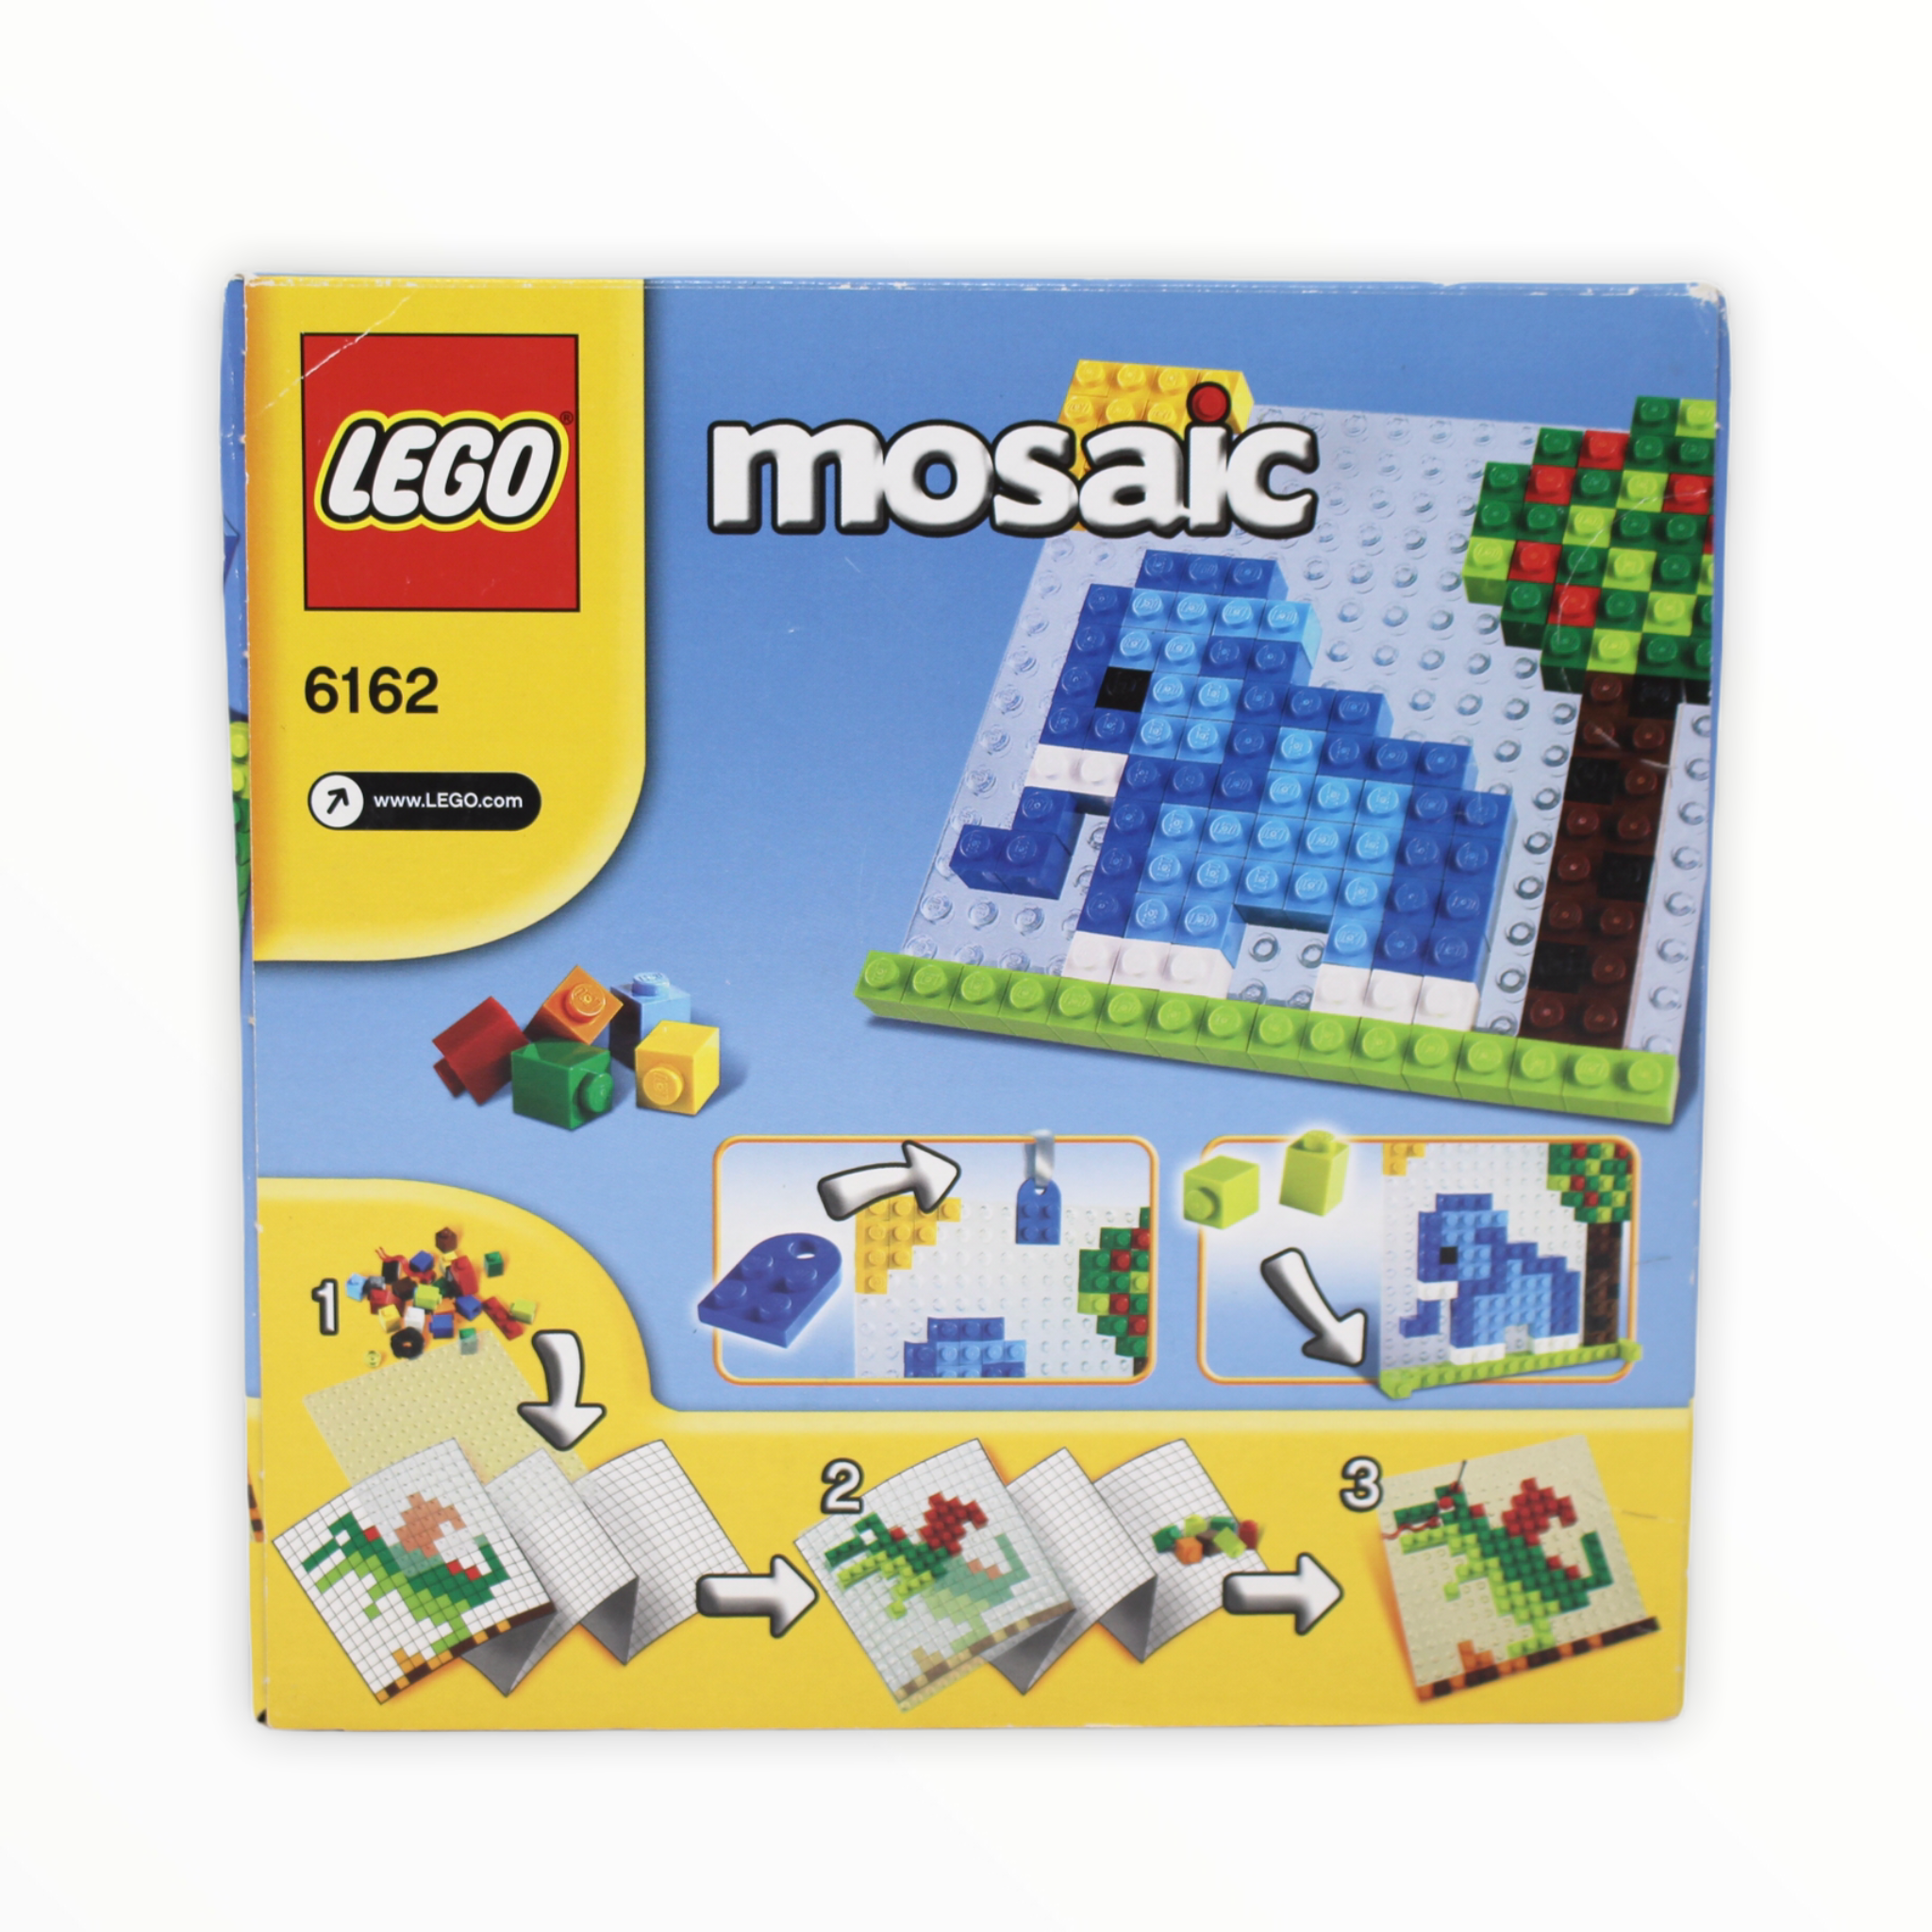 Integration Elastisk fugl Retired Set 6162 A World of LEGO Mosaic 4 in 1